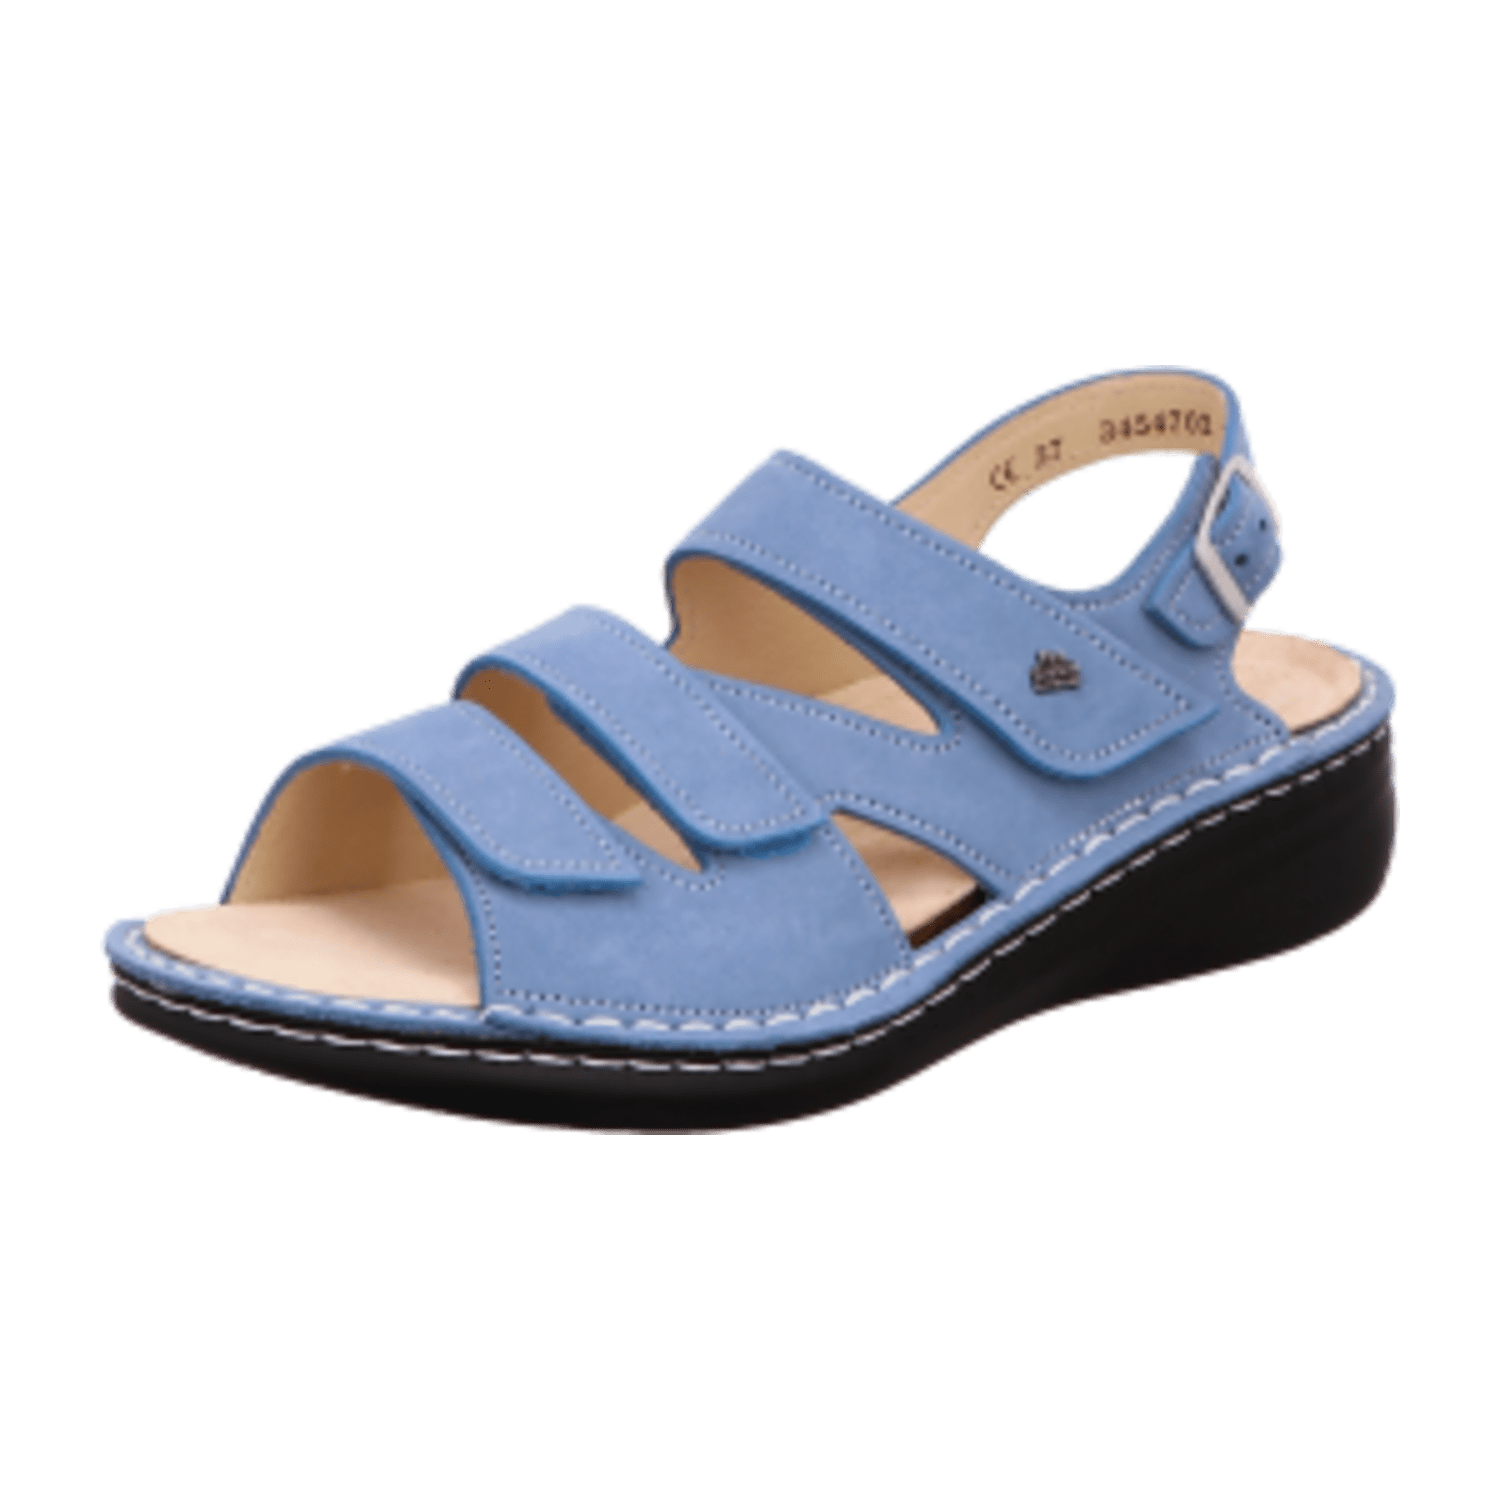 FinnComfort Praia Blue (Hellblau) - Sandale mit loser Einlage - Damenschuhe Sandale bequem / lose Einlage, Blau, leder (nubuk)